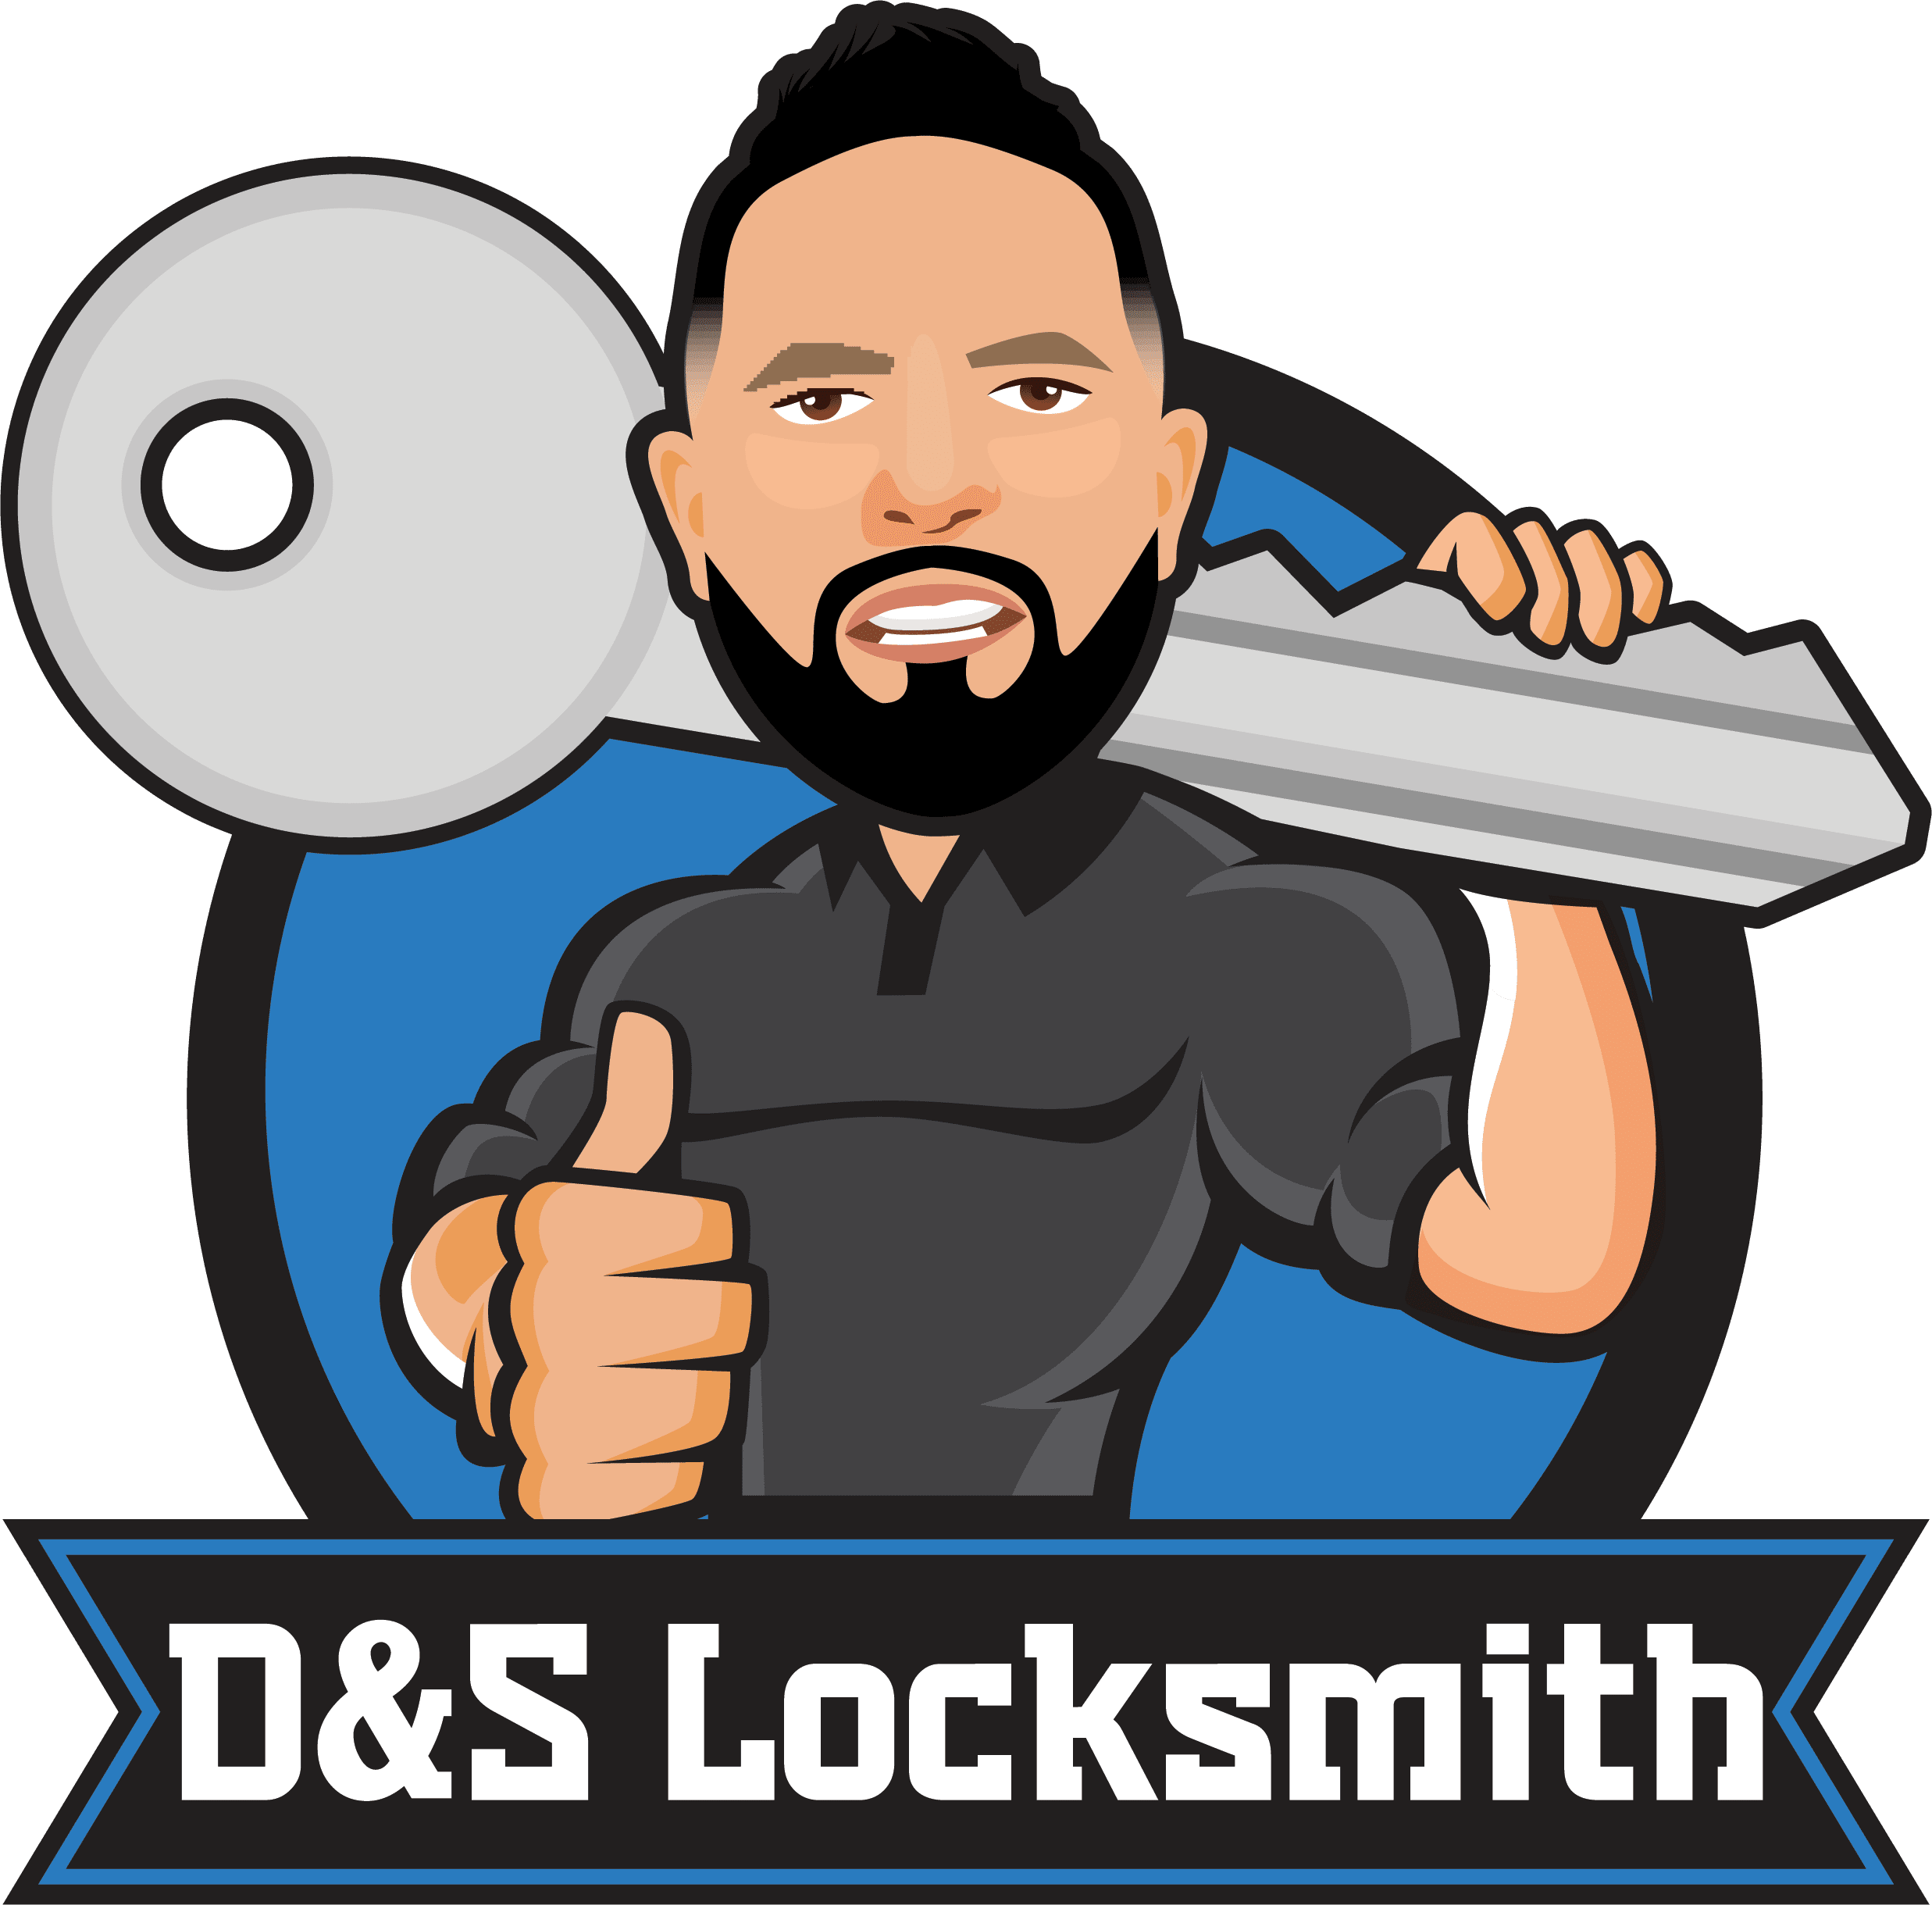 D&S Locksmith Service